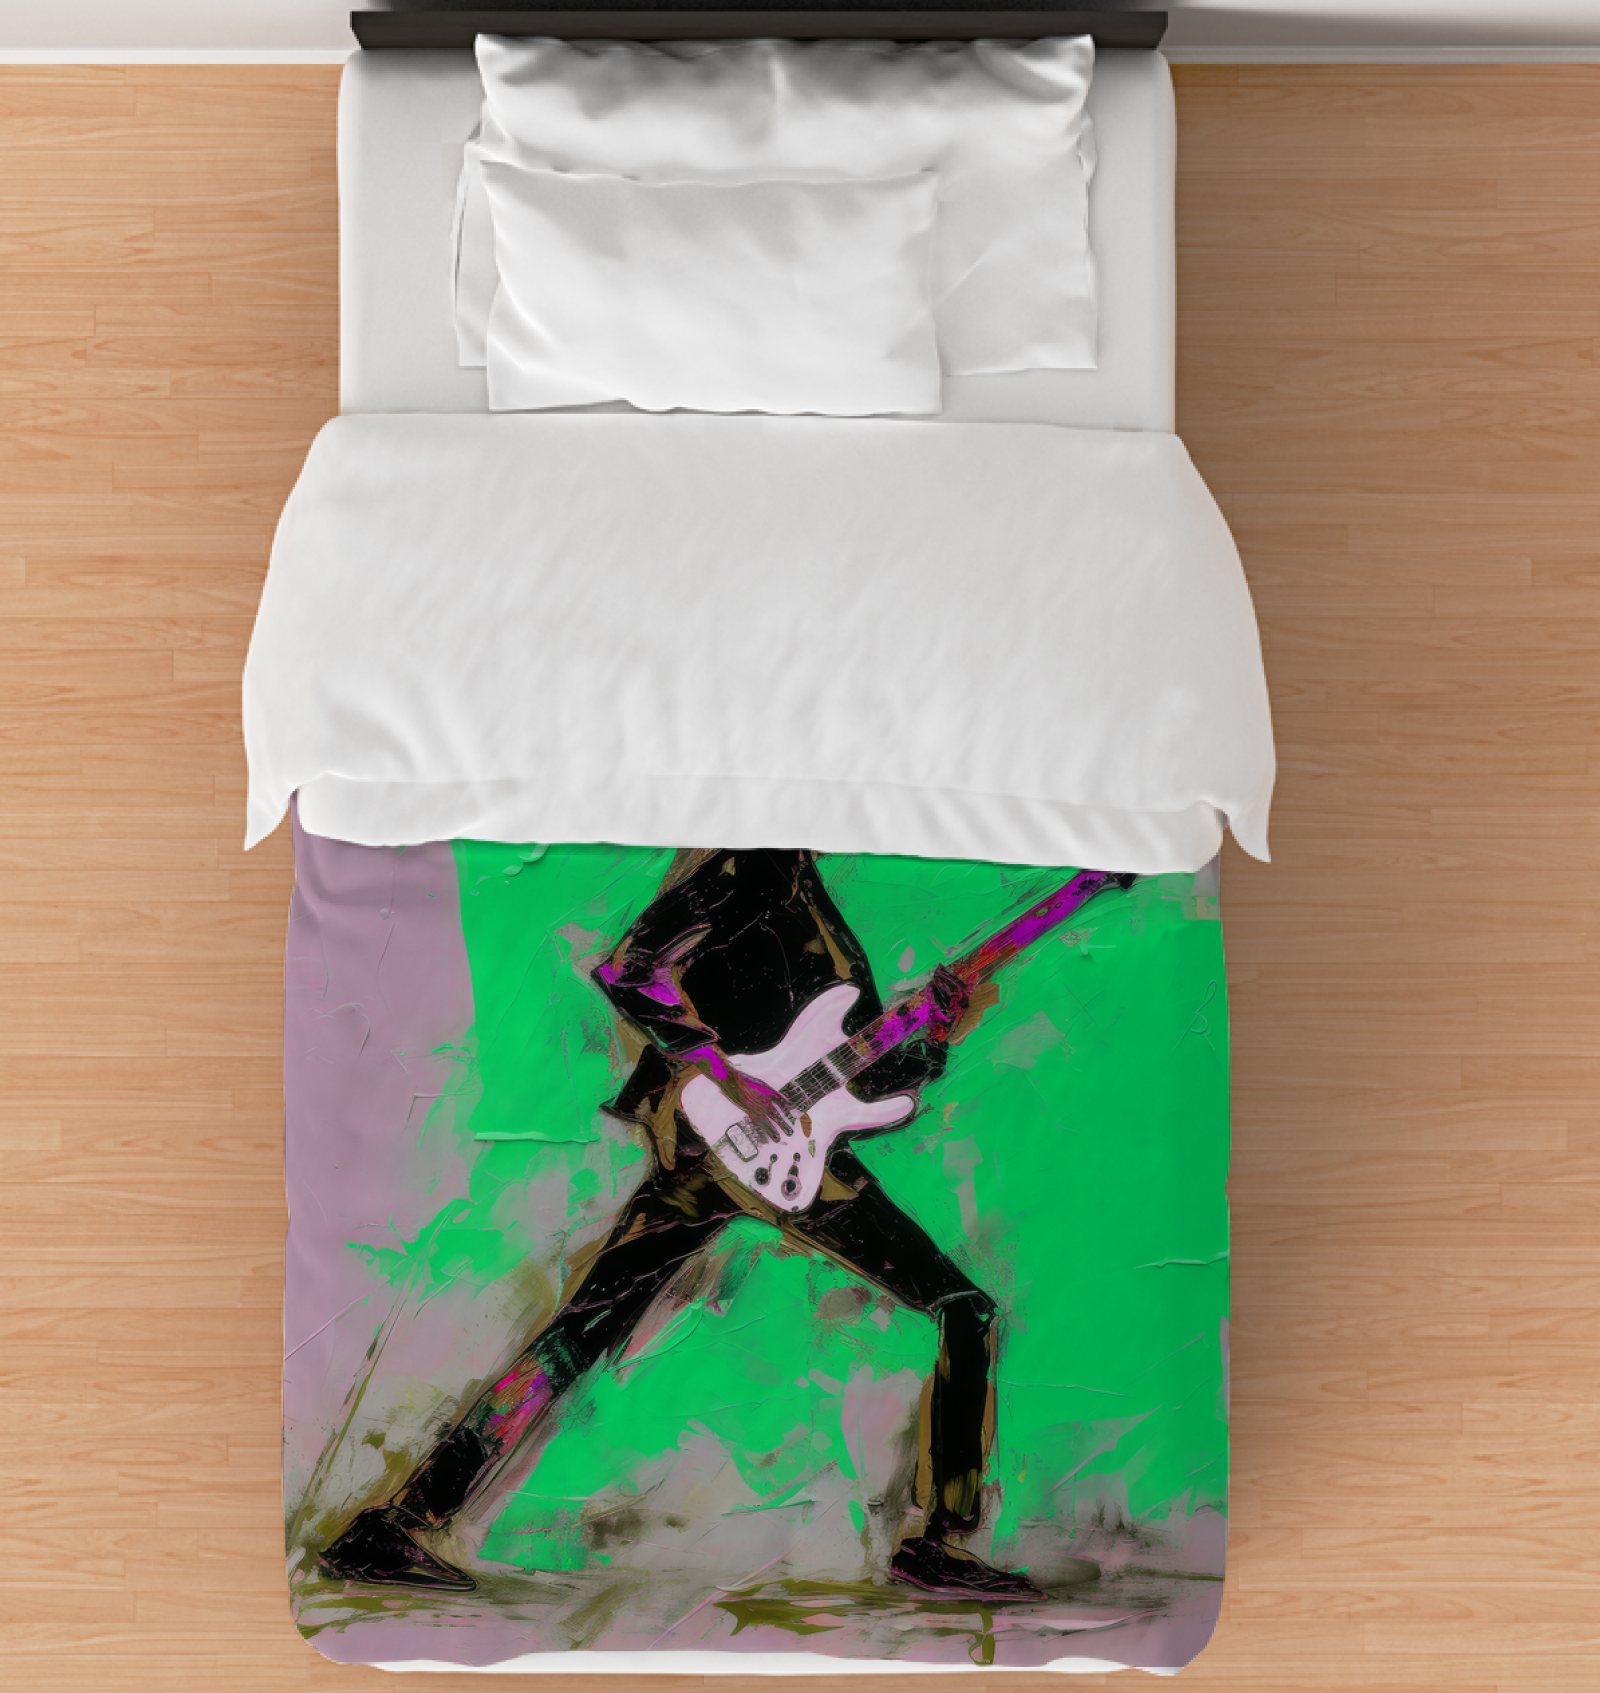 Serene Minimalist Abstract Comforter showcasing its elegant design.